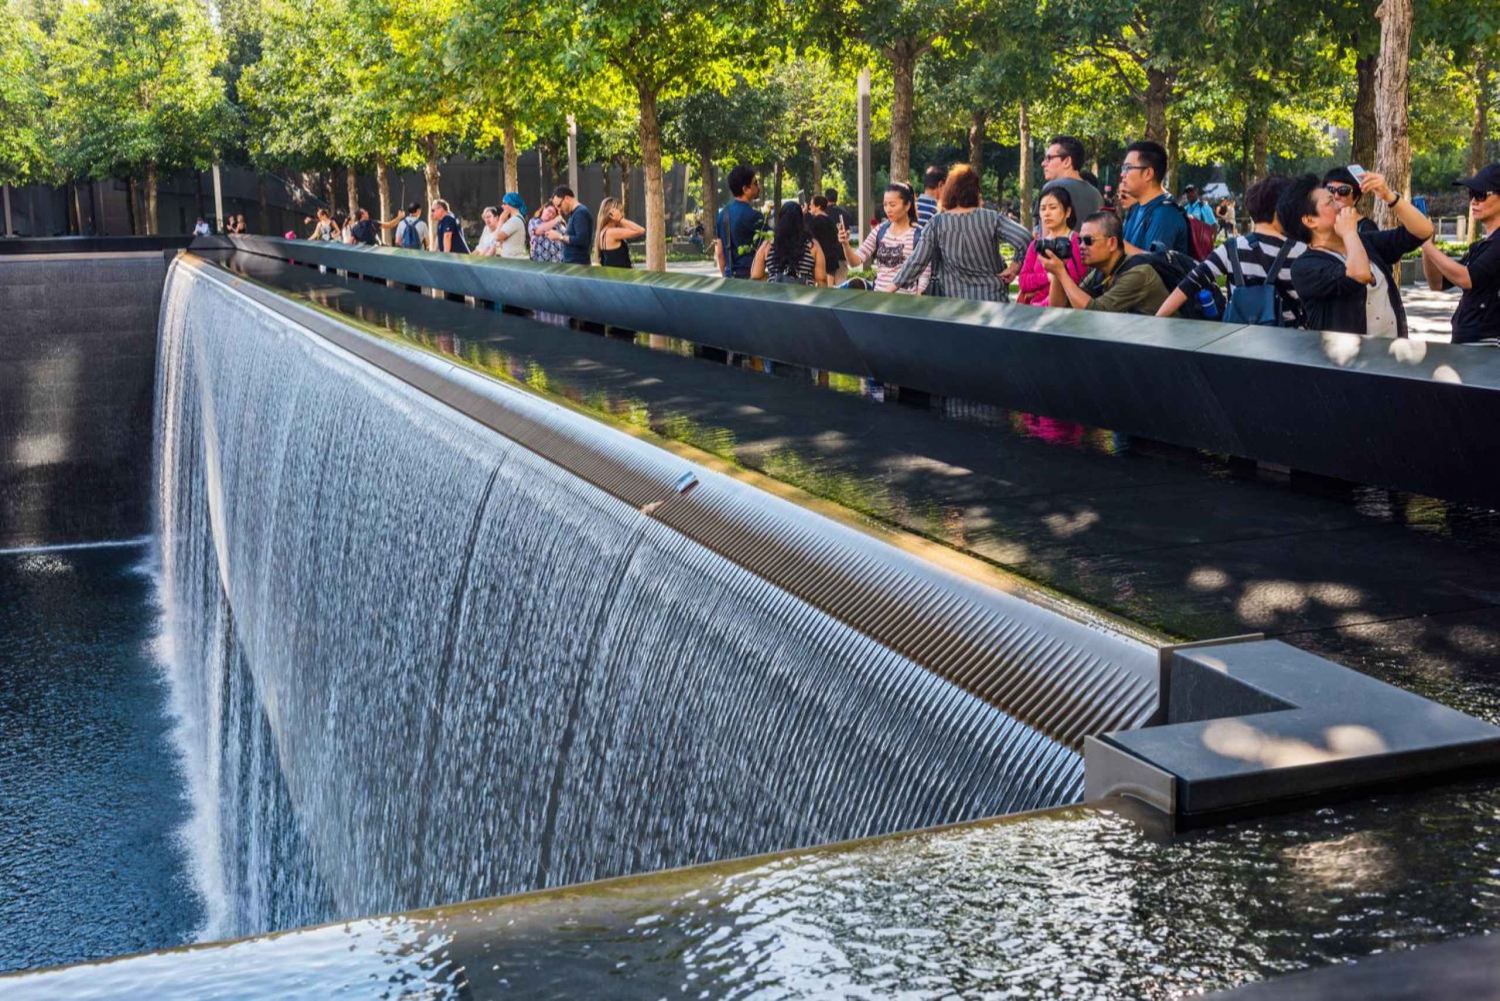 New York City: 9/11 Memorial - Ground Zero Walking Tour